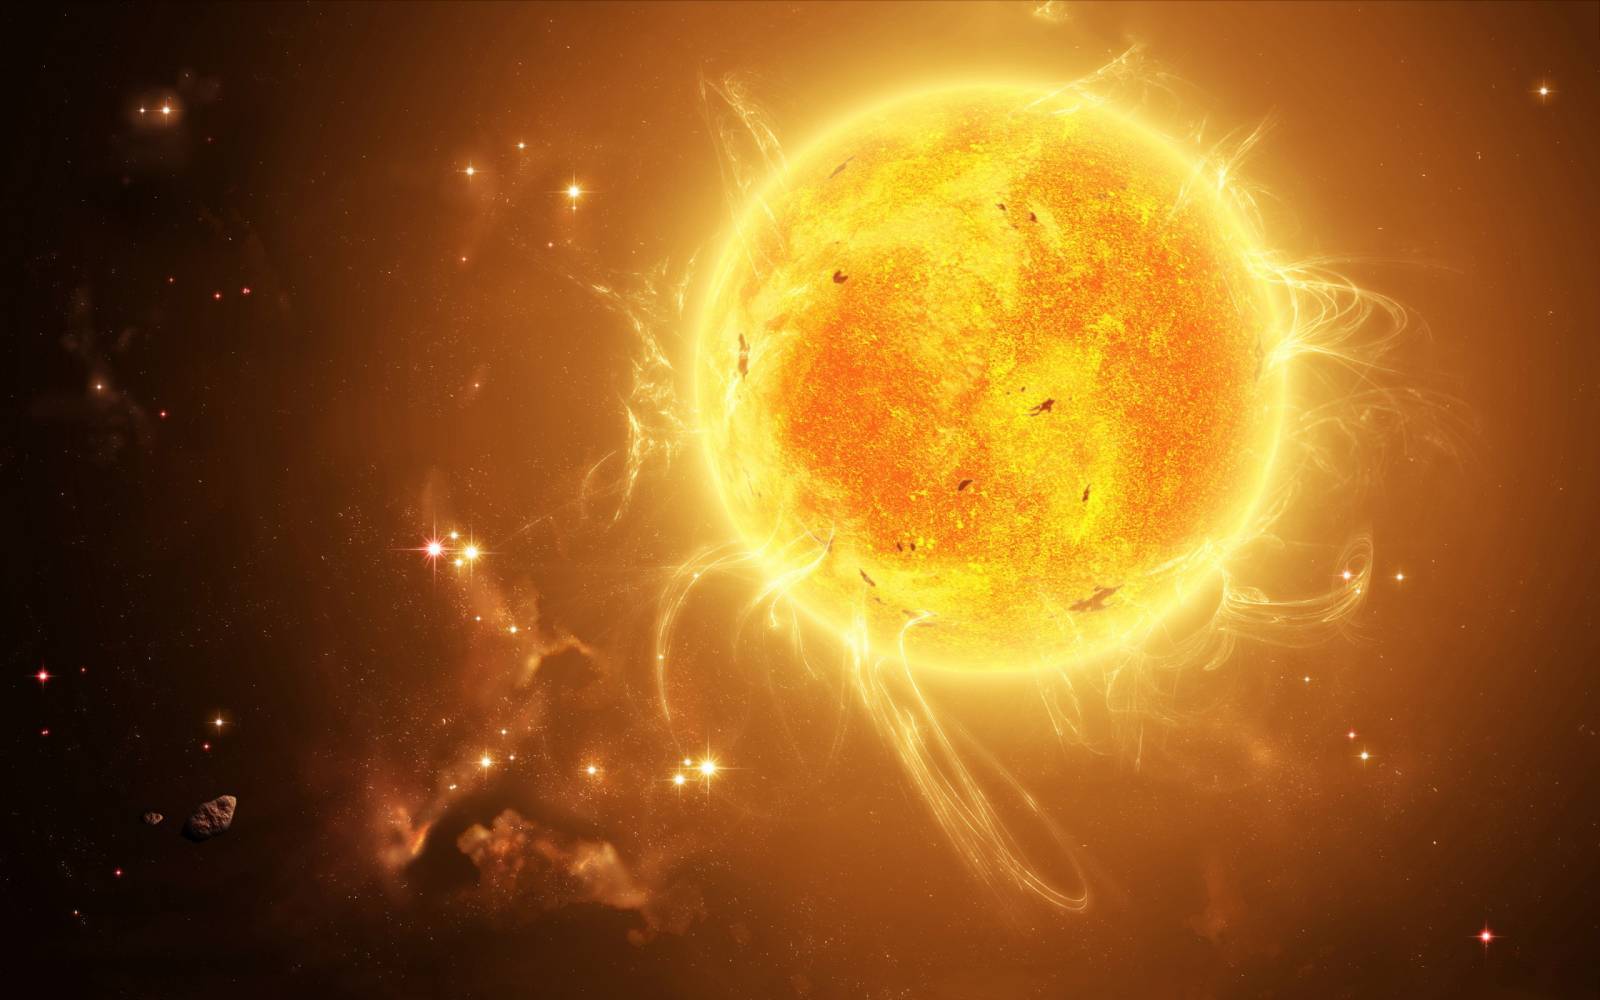 NASA. AVERTIZARE SOCANTA despre un MARE PERICOL de la Soare